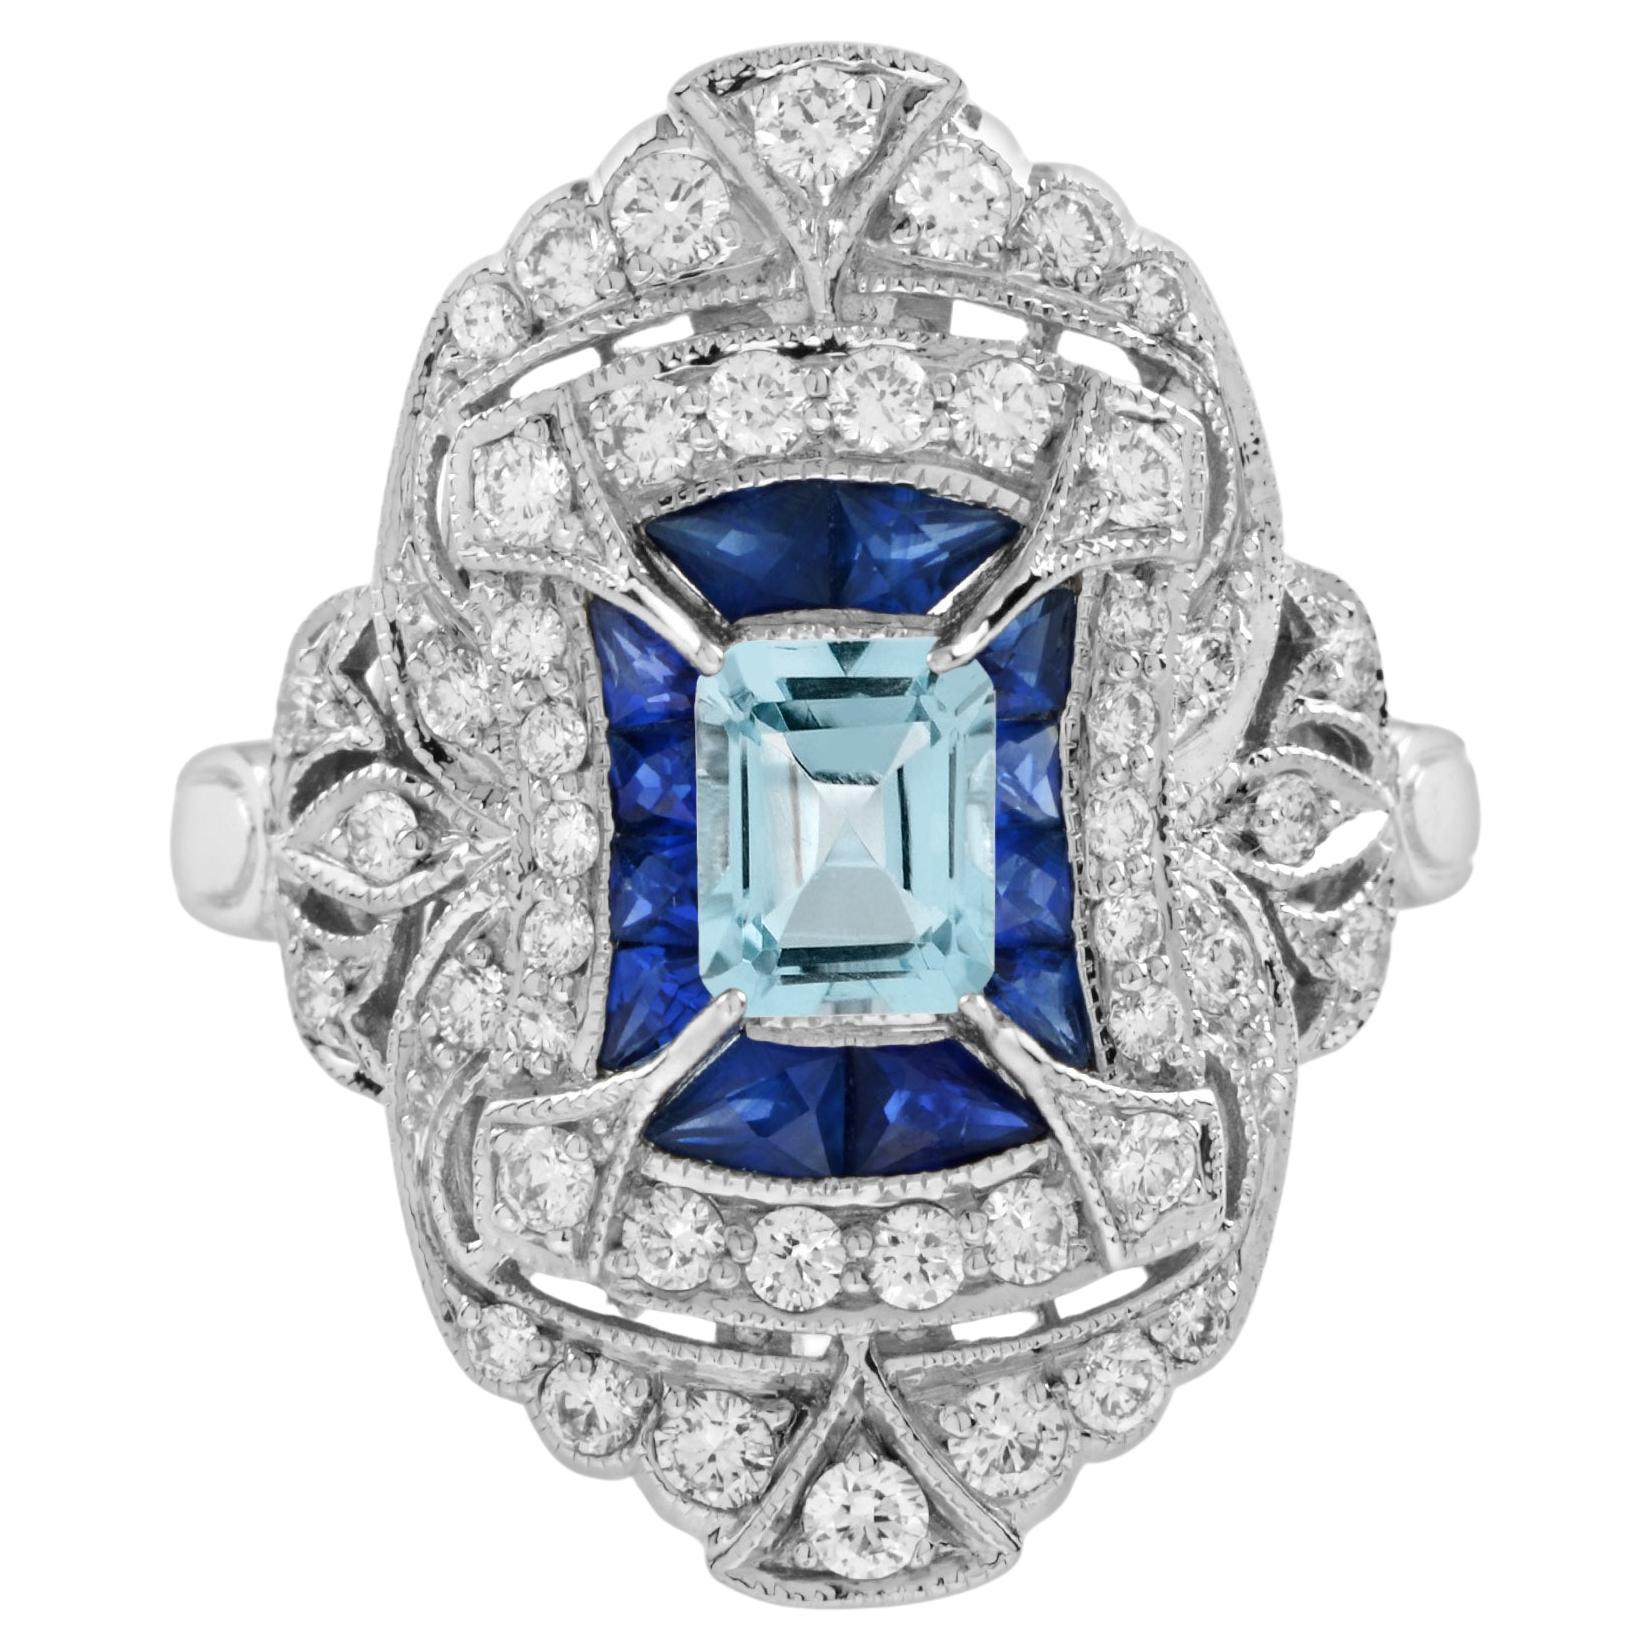 For Sale:  Aquamarine Blue Sapphire Diamond Art Deco Style Dinner Ring in 18K White Gold